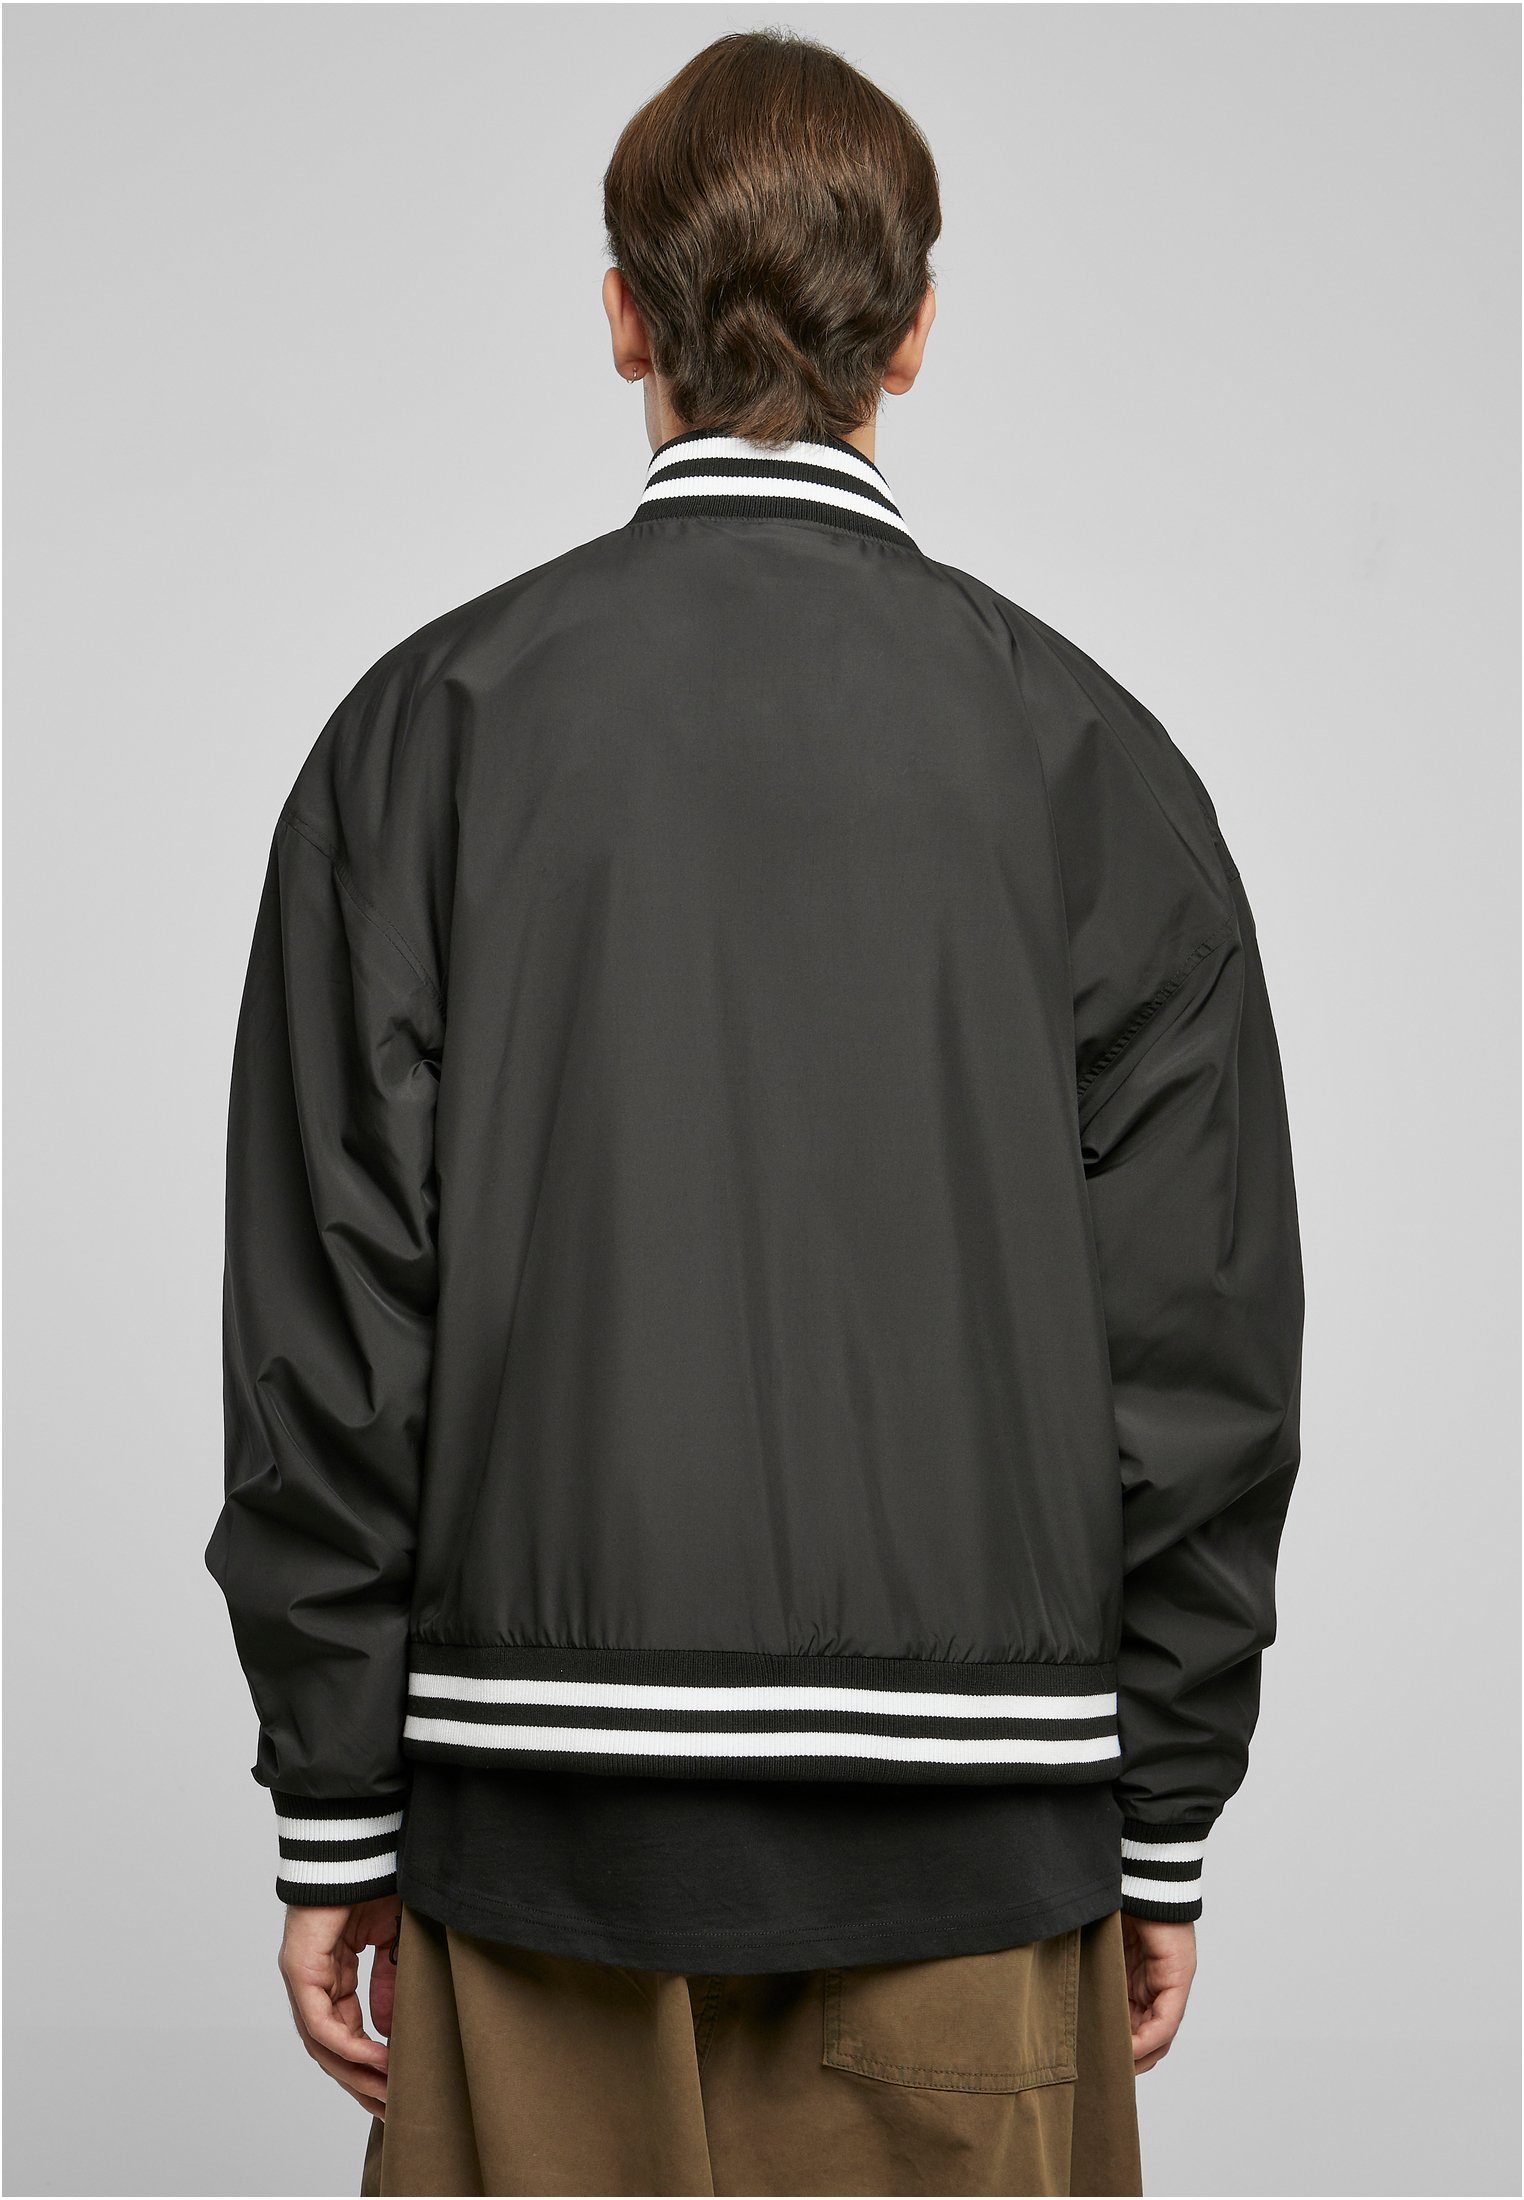 URBAN CLASSICS Light Herren Outdoorjacke (1-St) College Jacket black